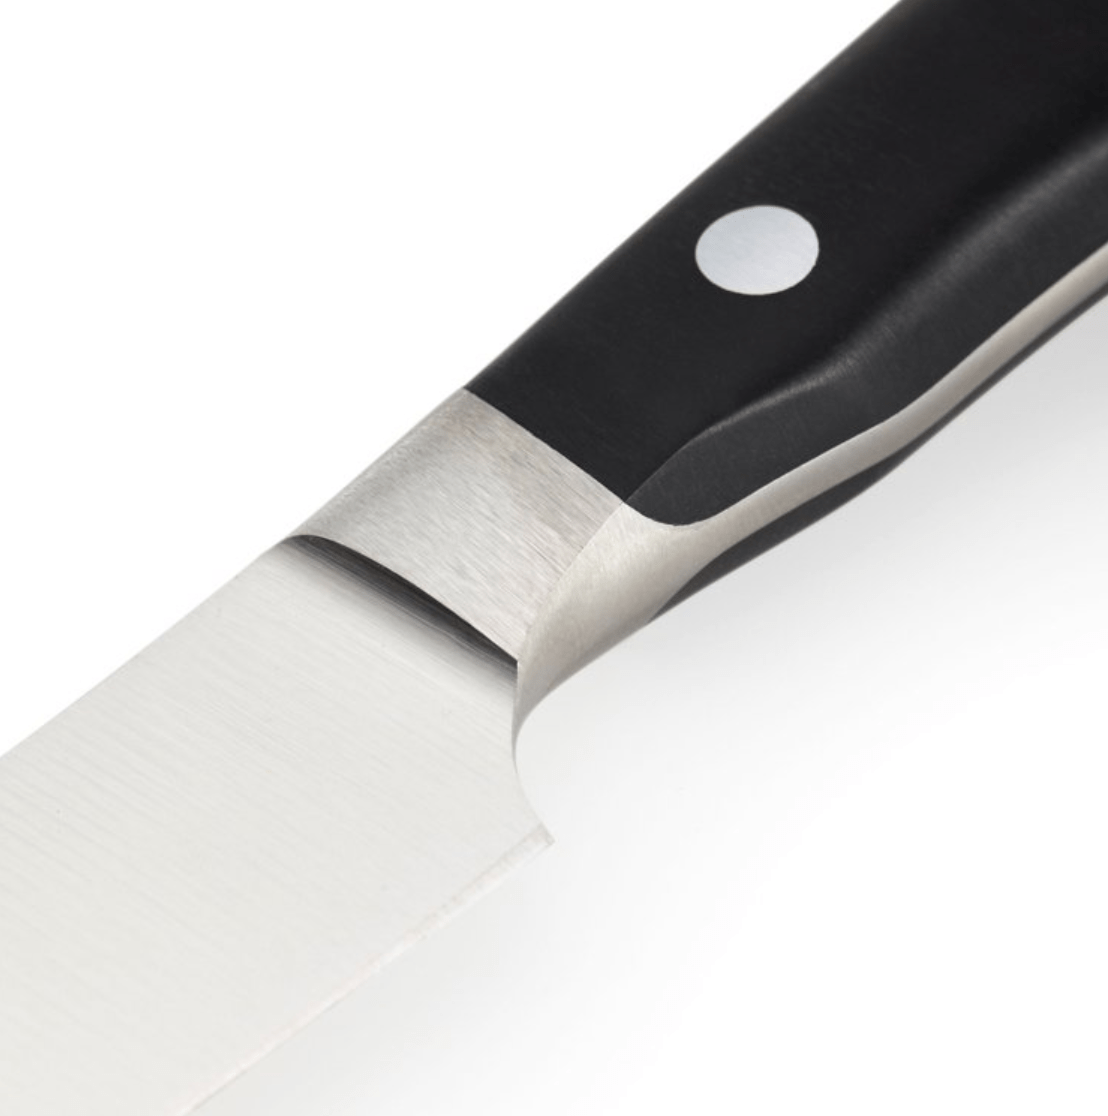 Wusthof Classic Ikon Black Utility Knife 16cm 1040330716